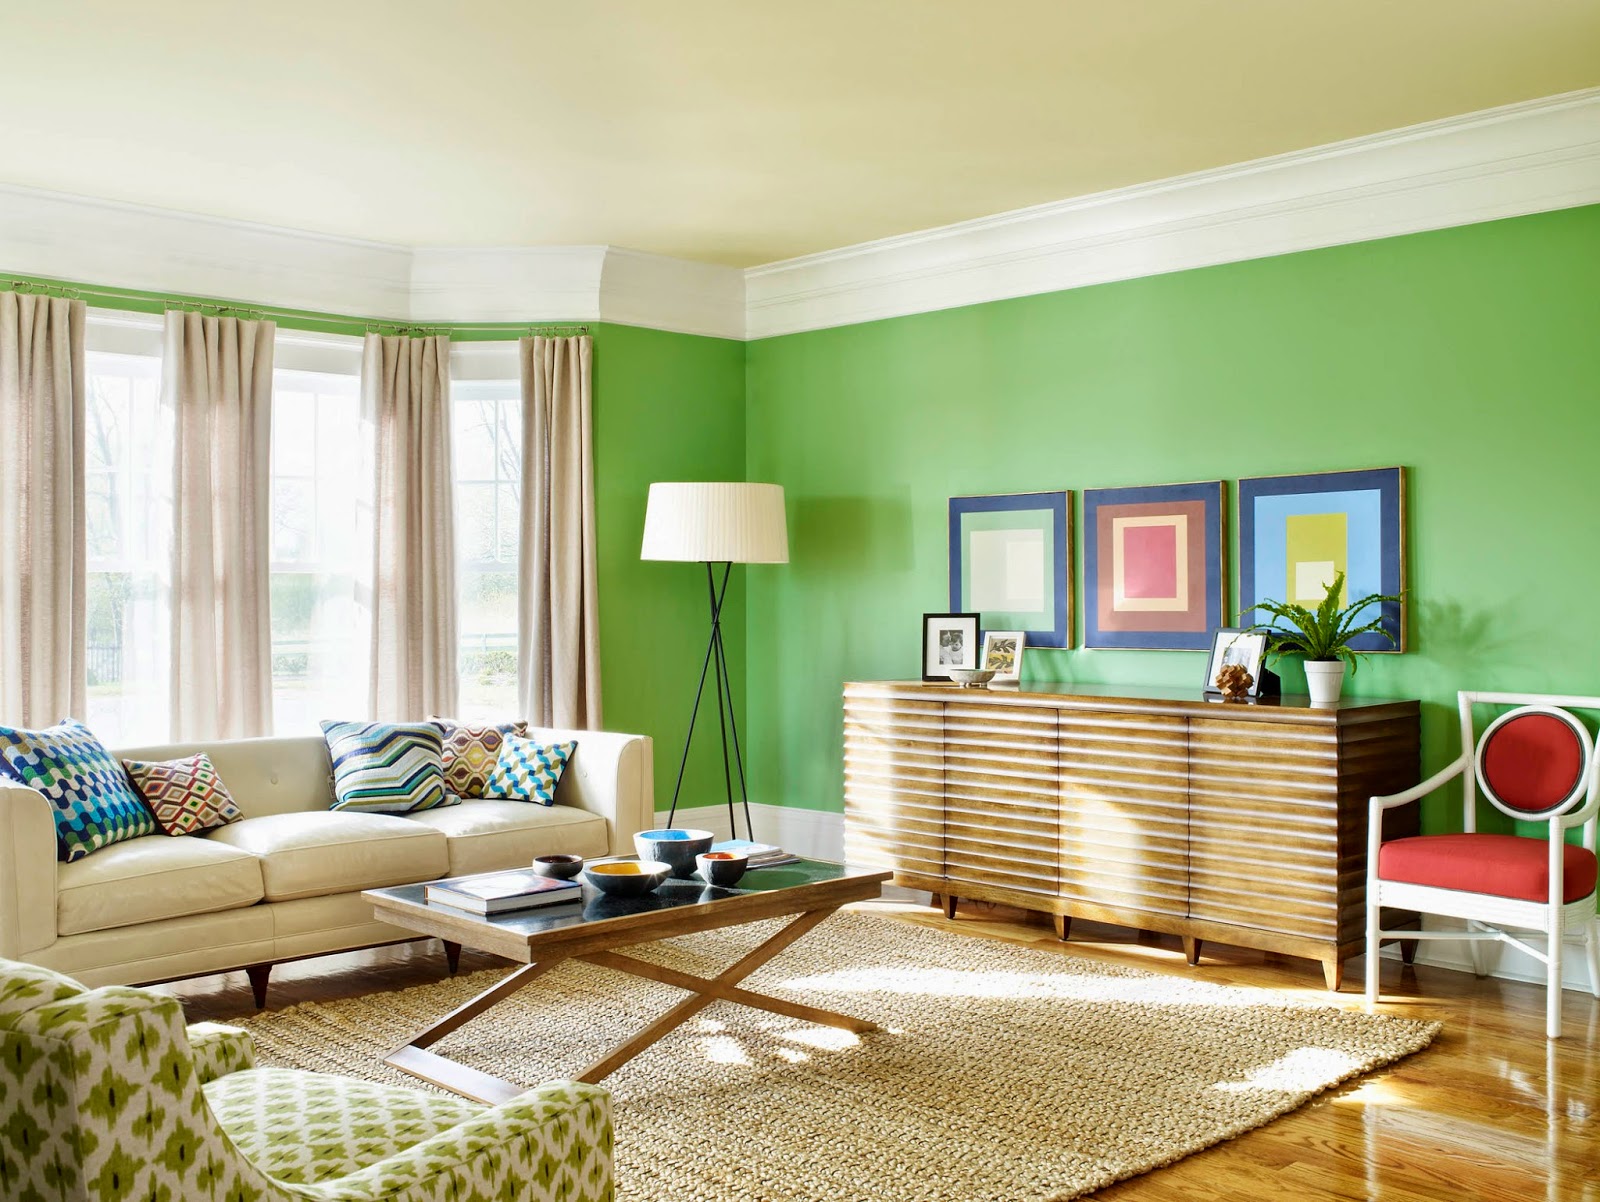 wallpaper hijau polos,living room,furniture,room,interior design,property